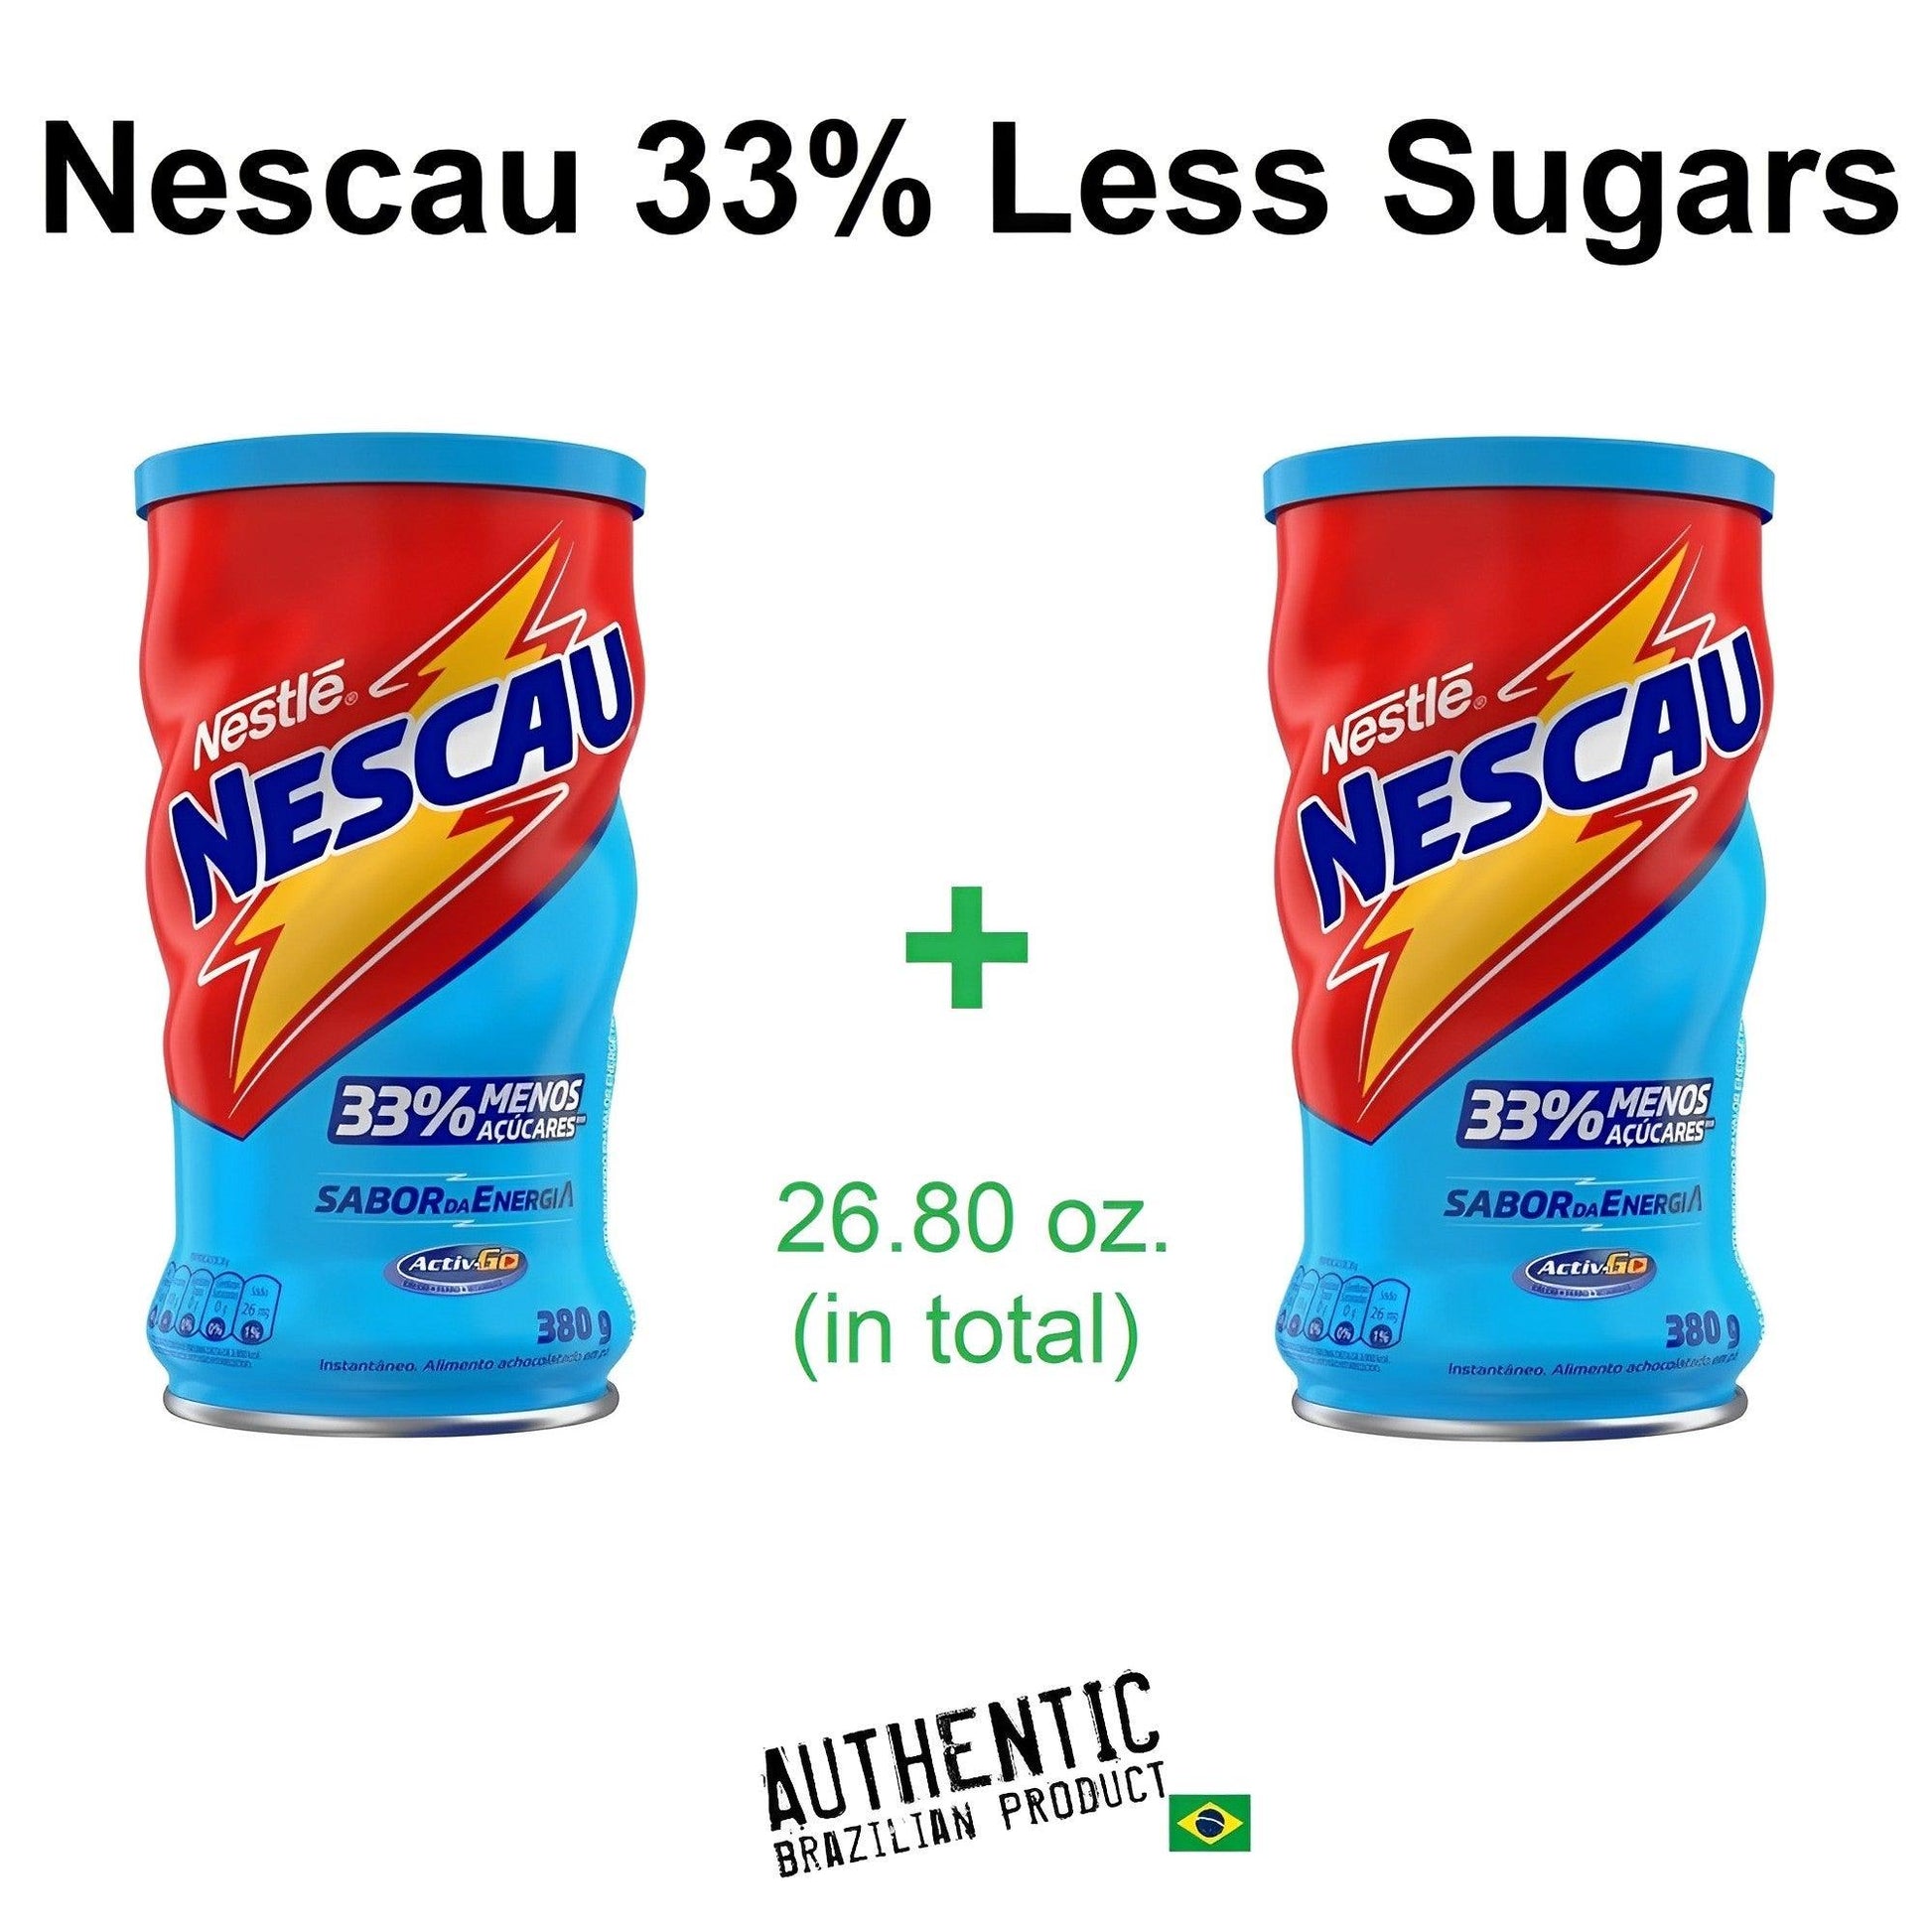 Nestlé Nescau 33% Less Sugars 13.40 oz. (Pack of 2) - Brazilian Shop